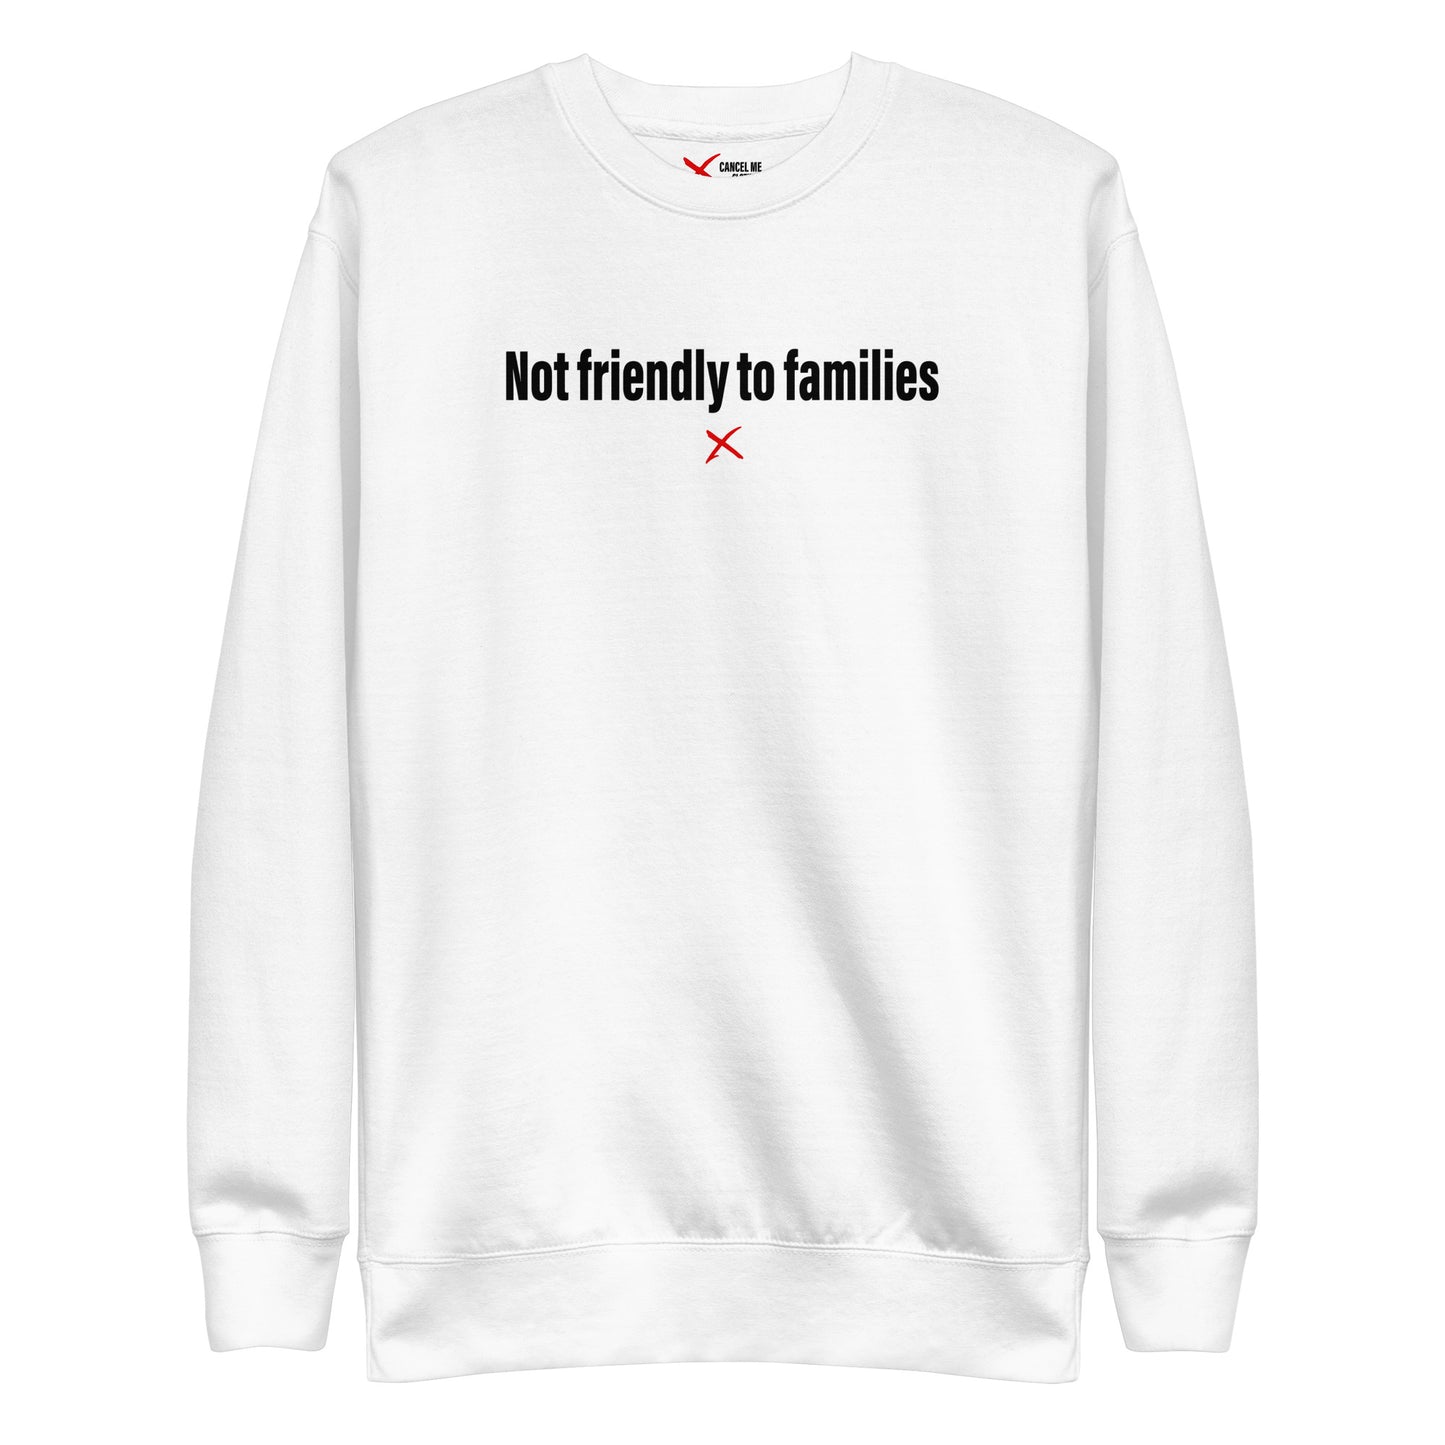 Not friendly to families - Sweatshirt